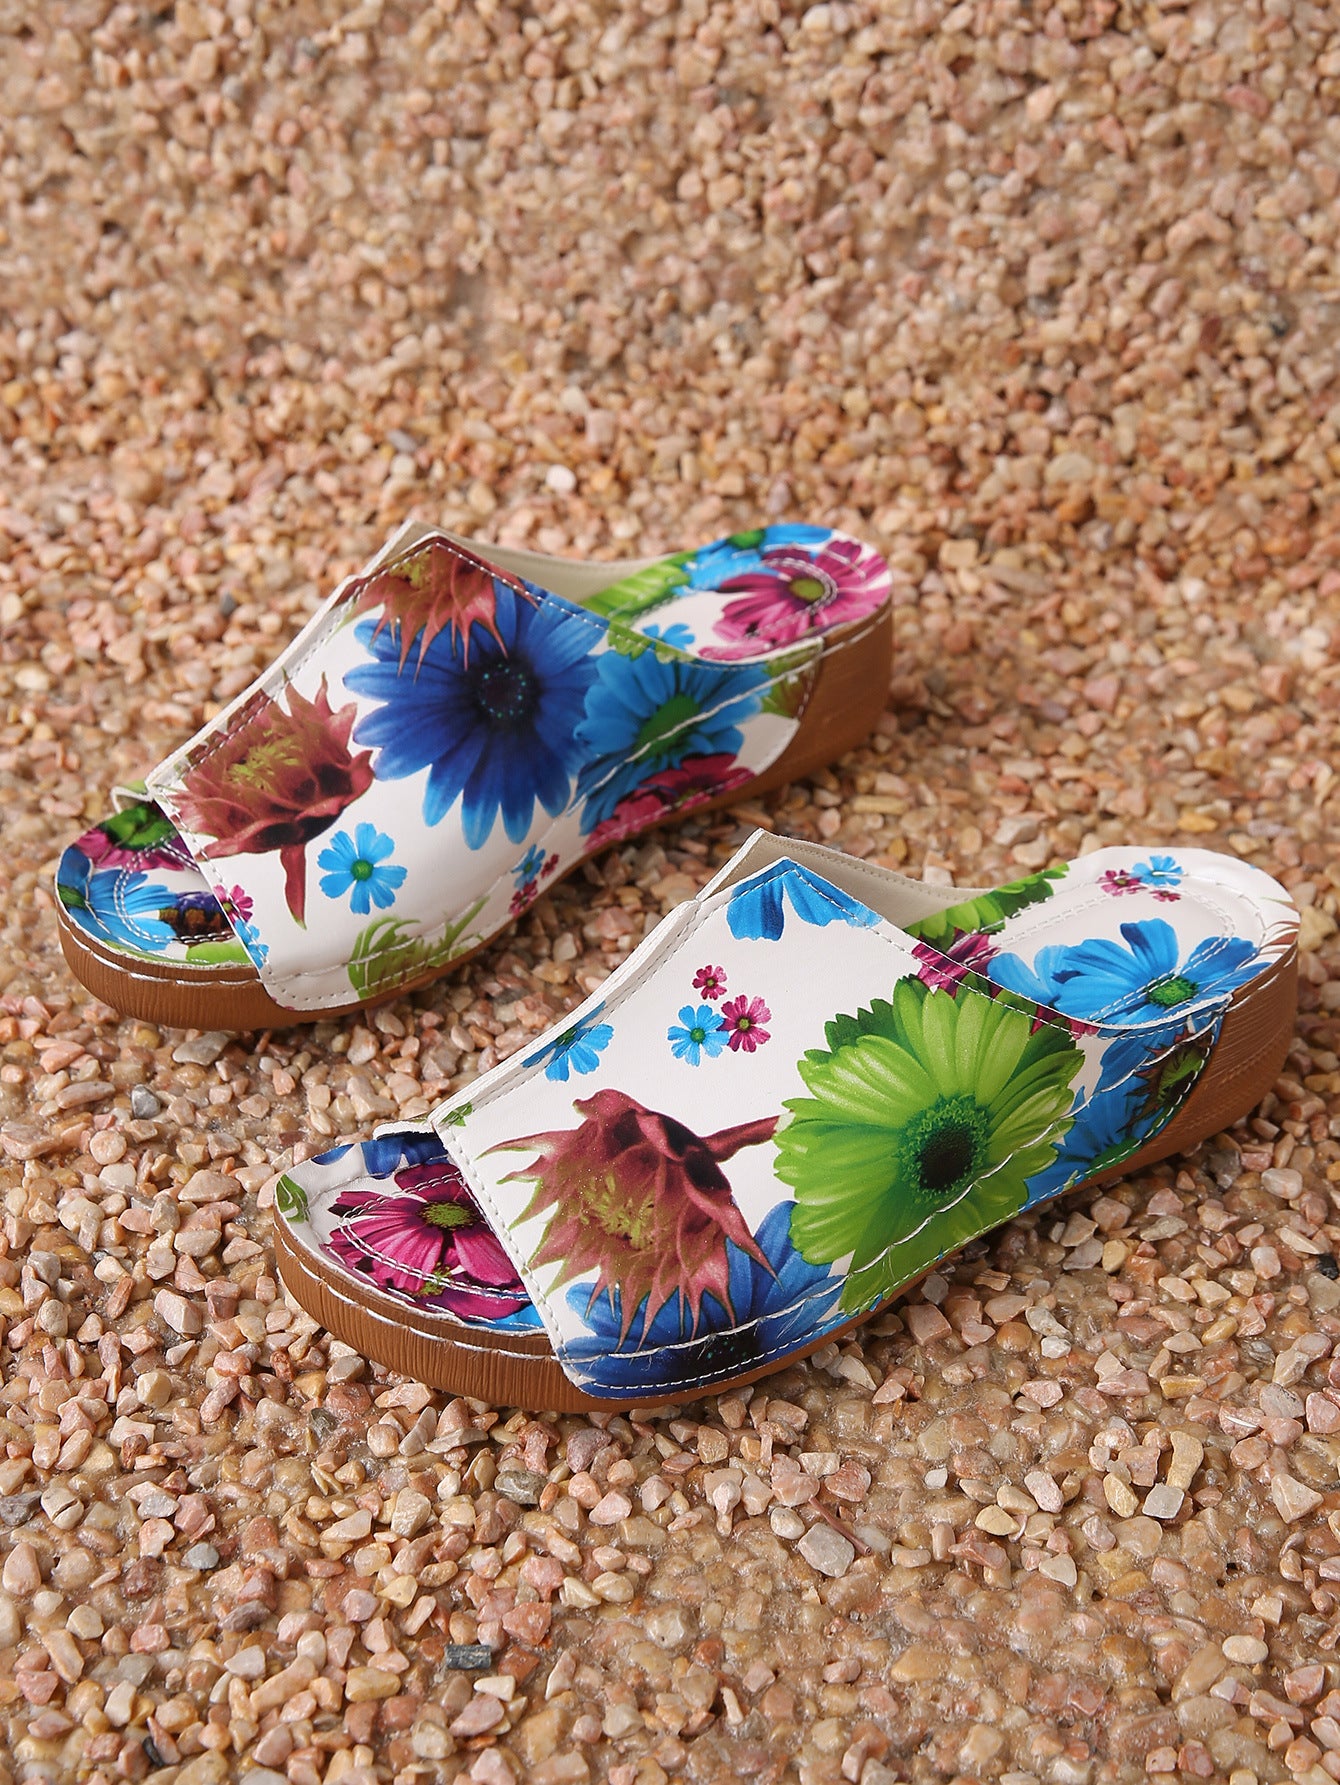 Peep Toe Wedge Fashion Simple Slip-on Fashion Sandal Slippers